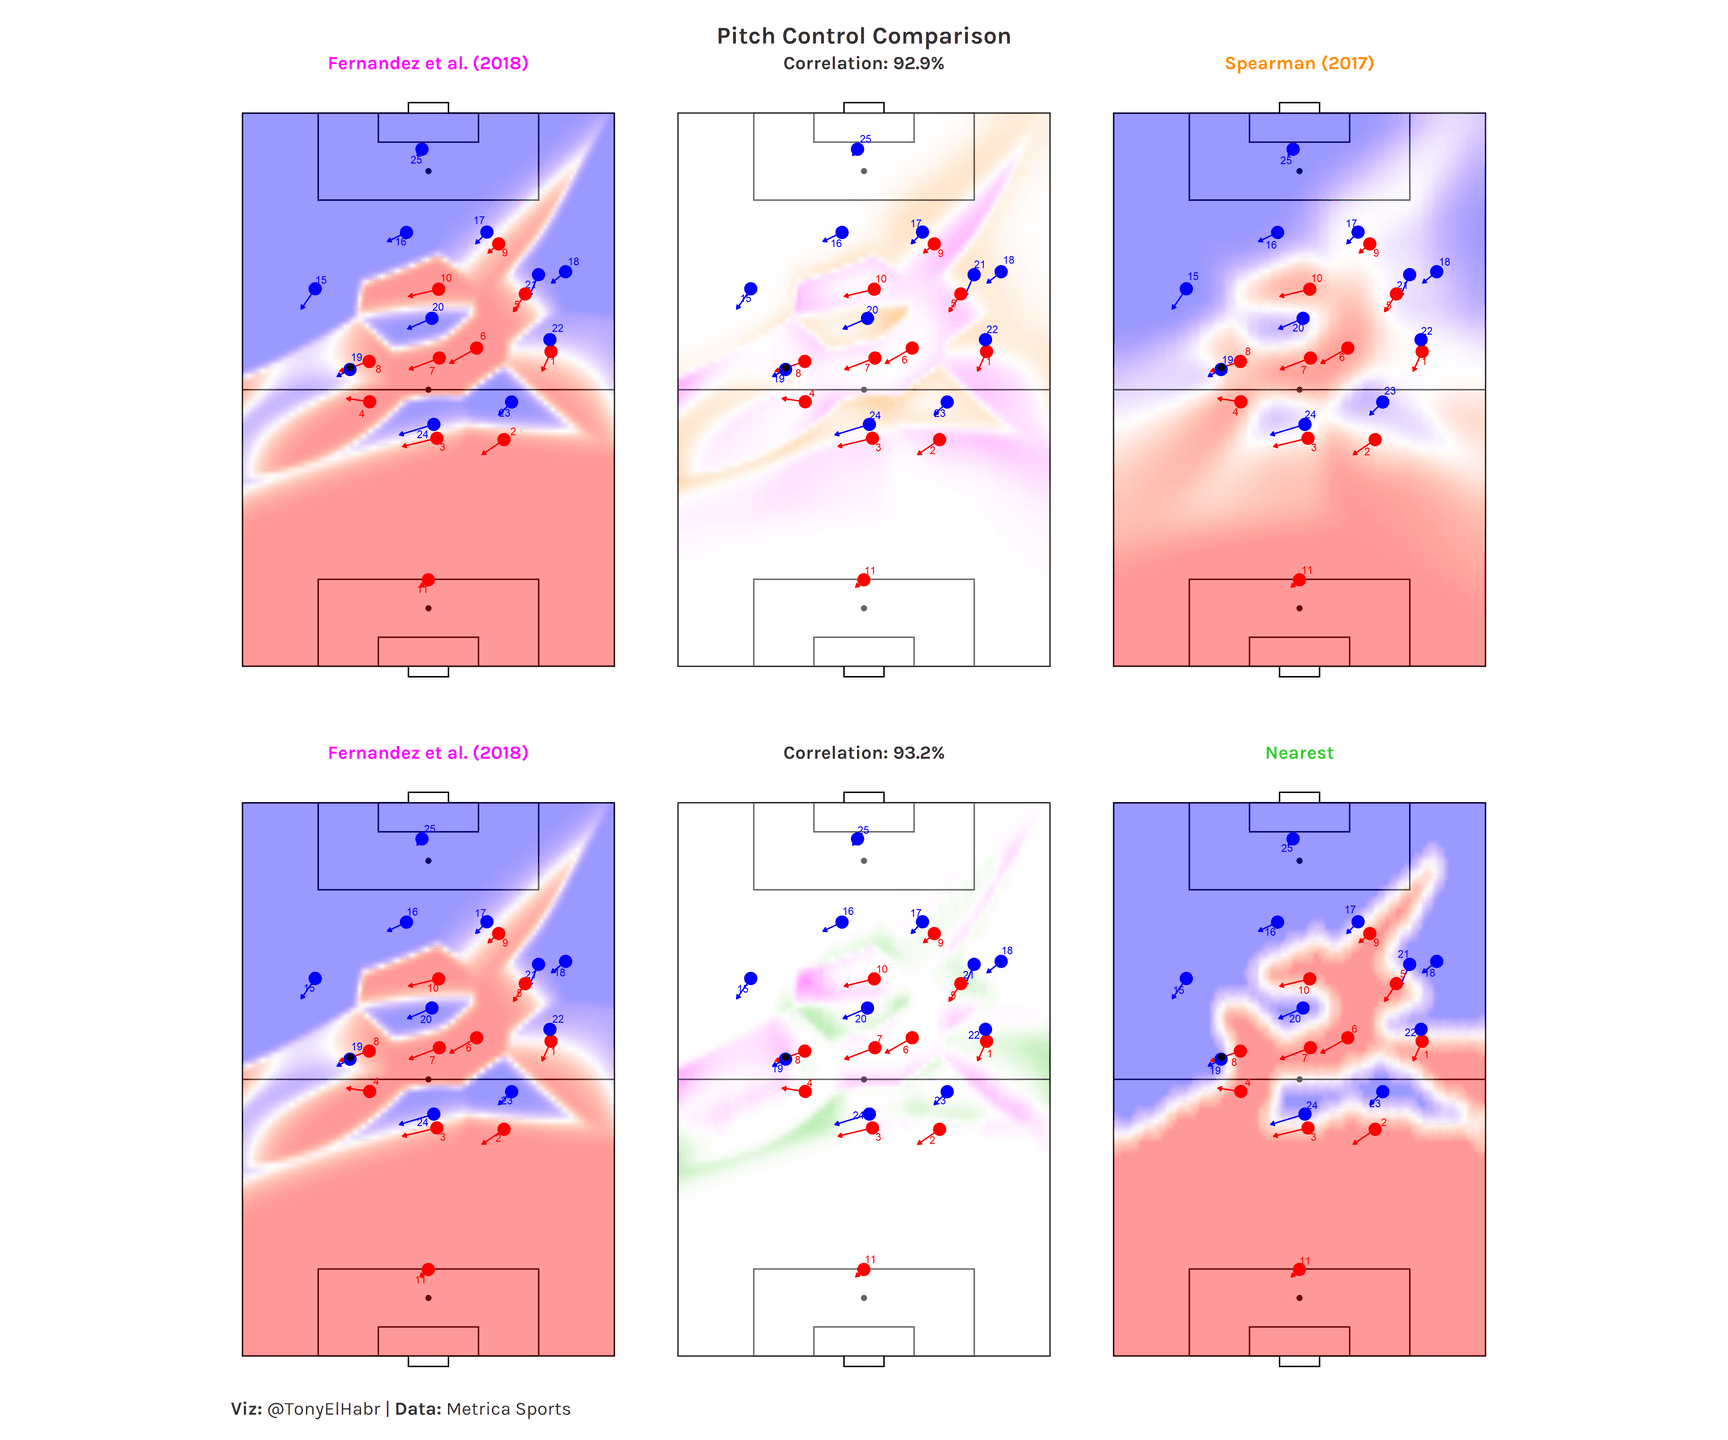 Comparison of Pitch Control Models